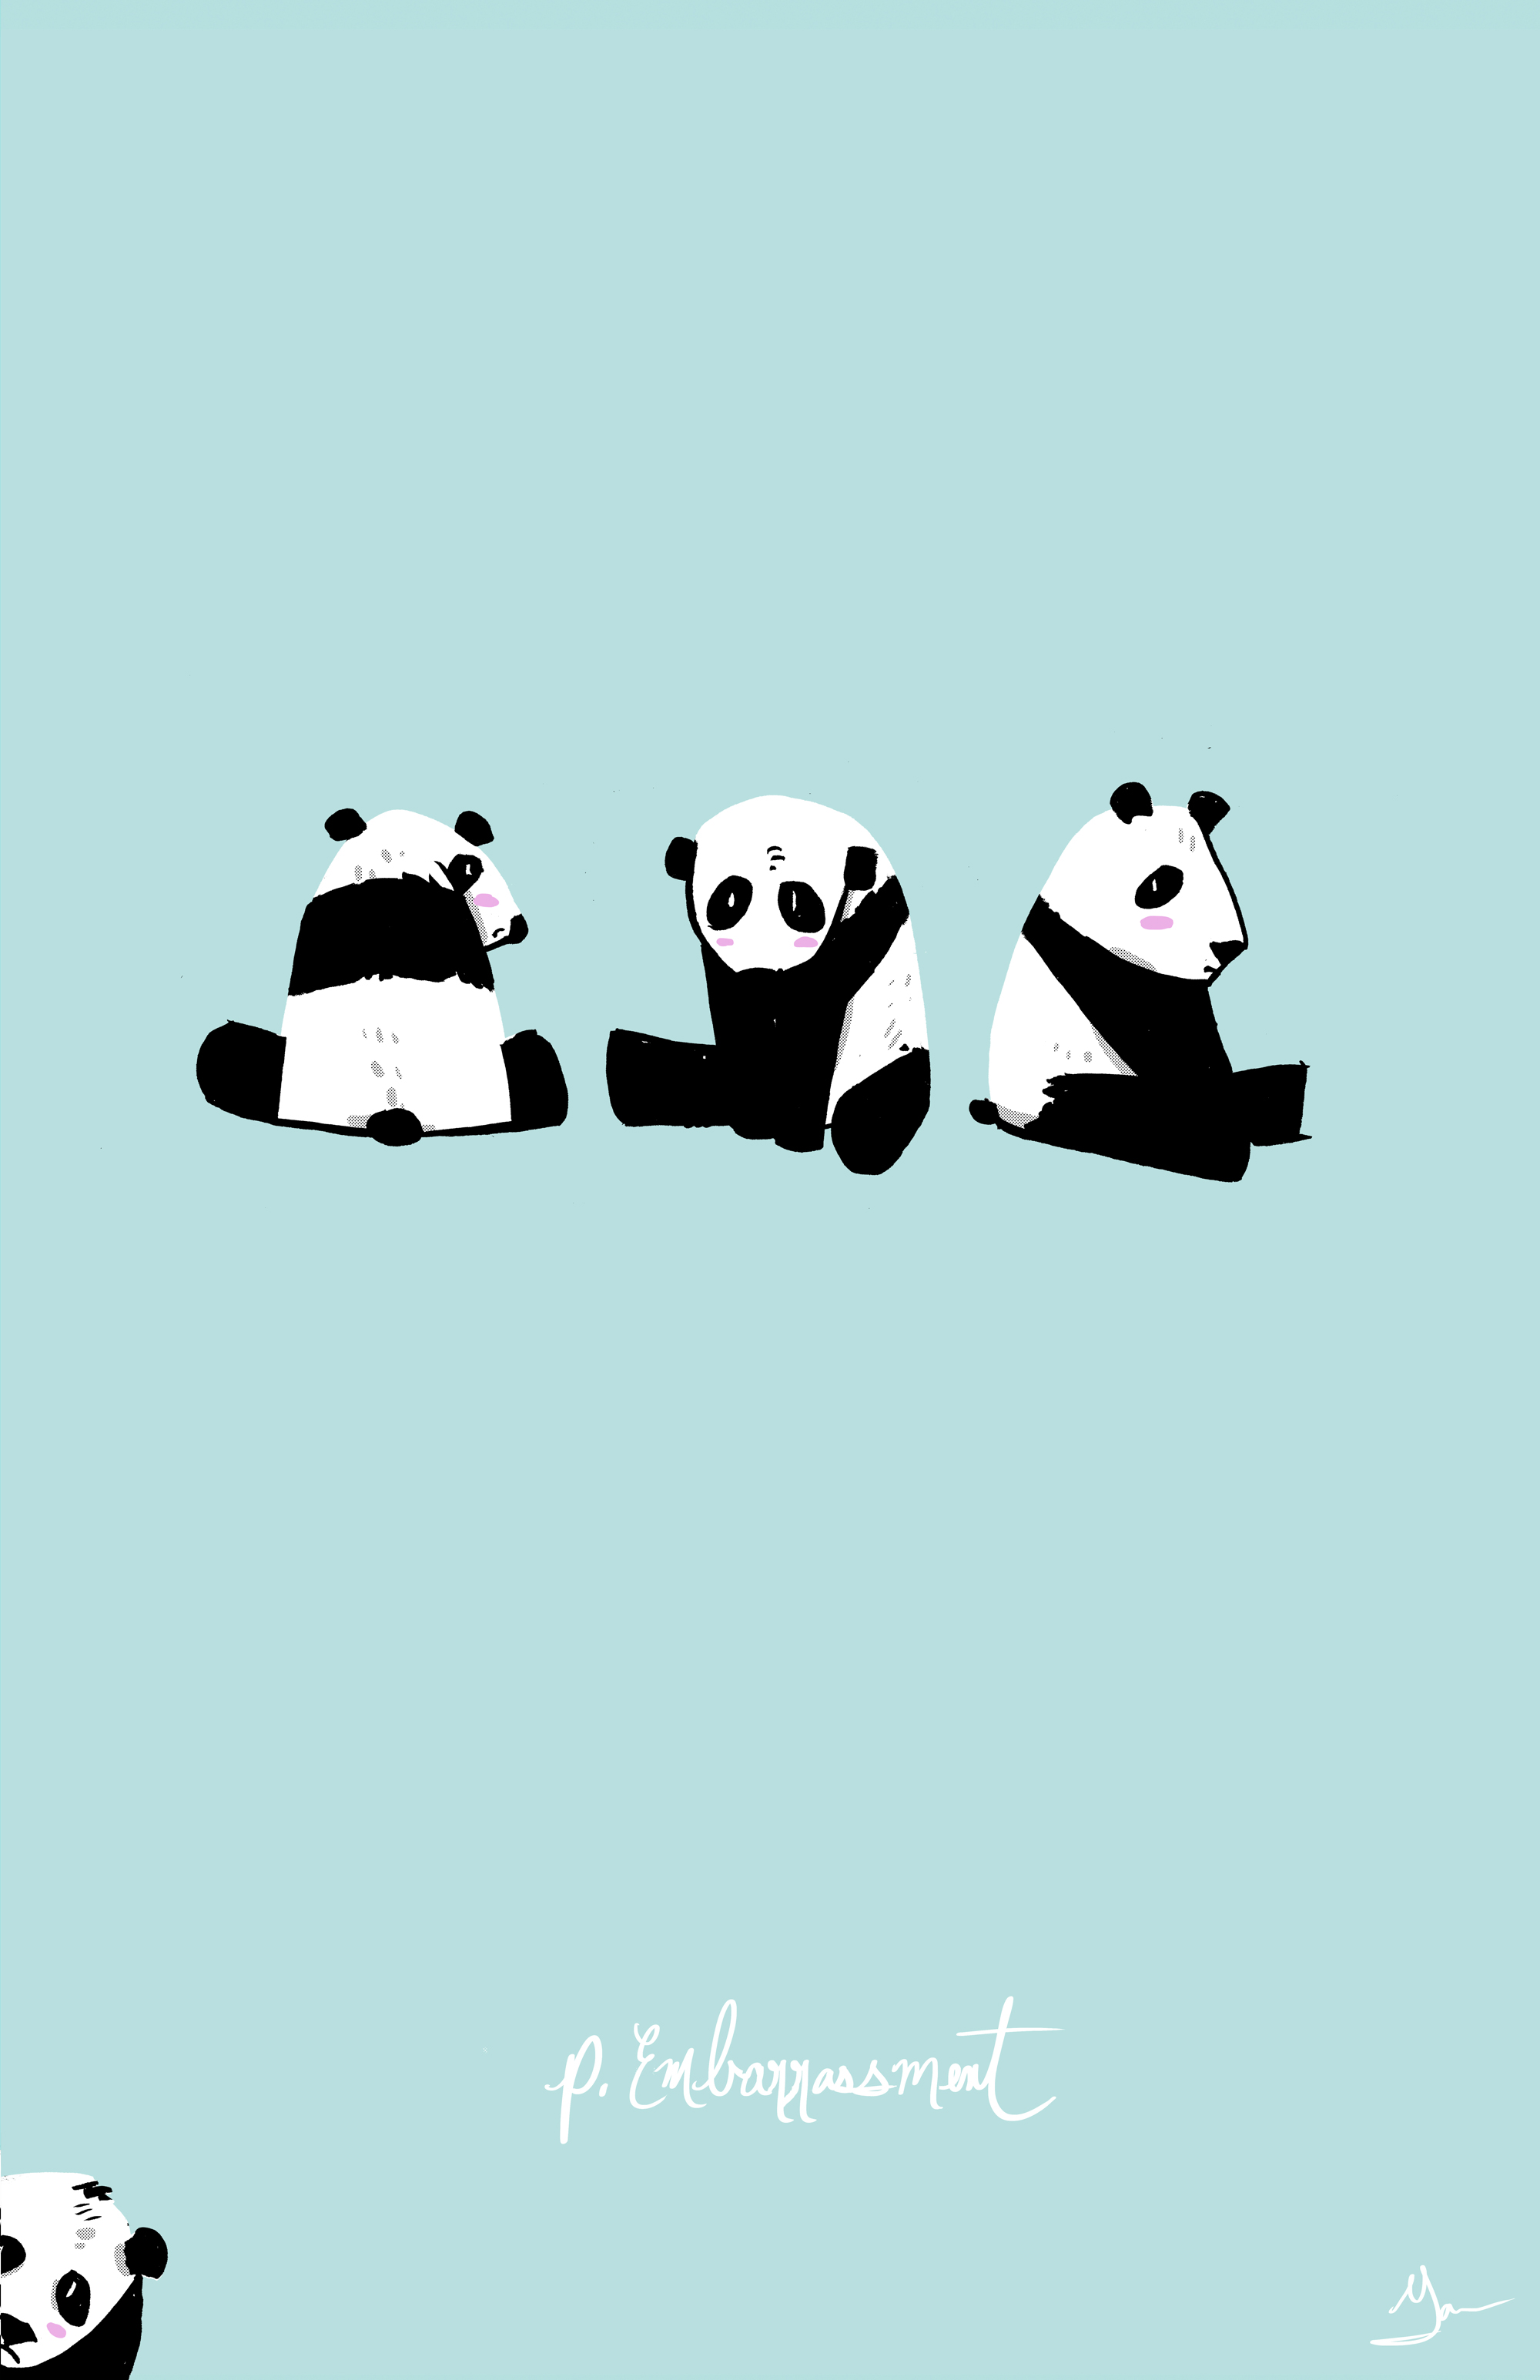 Three embarrassed pandas.